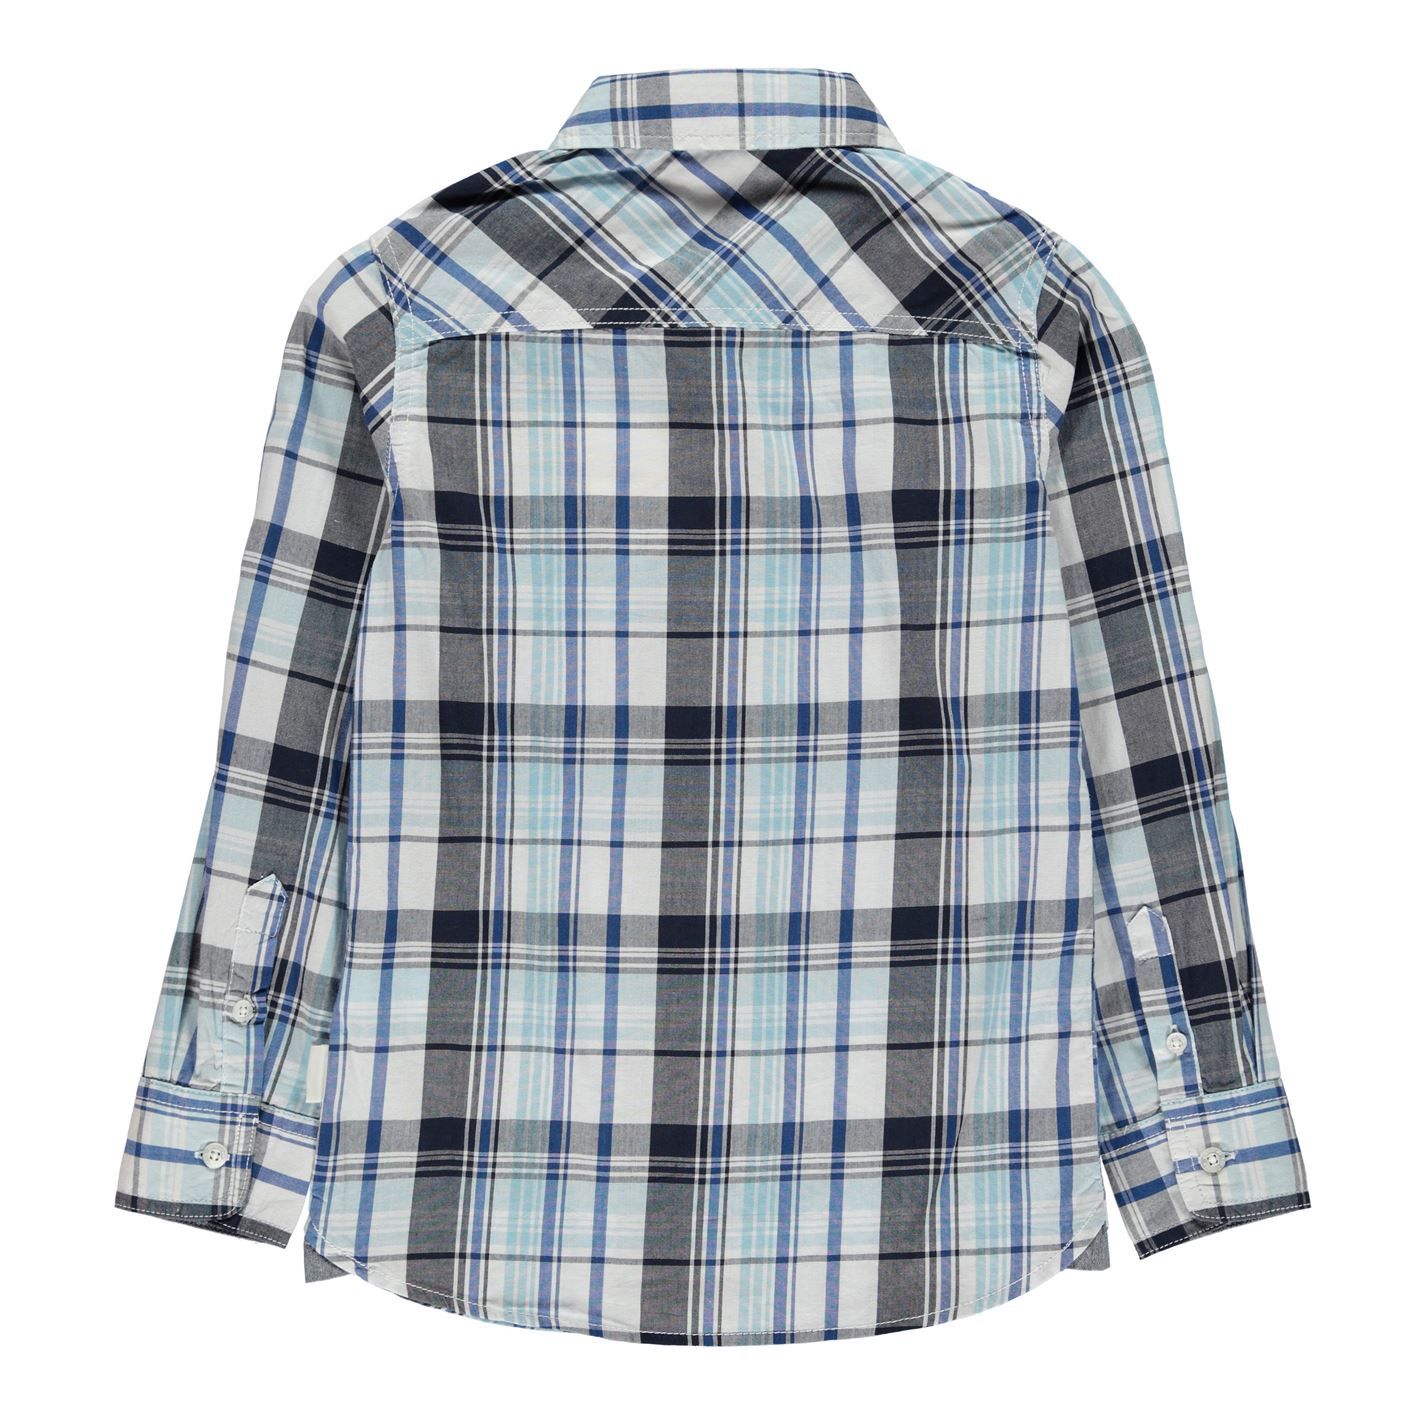 Lee Cooper Kids Long Sleeve Checked Shirt Junior Boys Chest Pocket Top